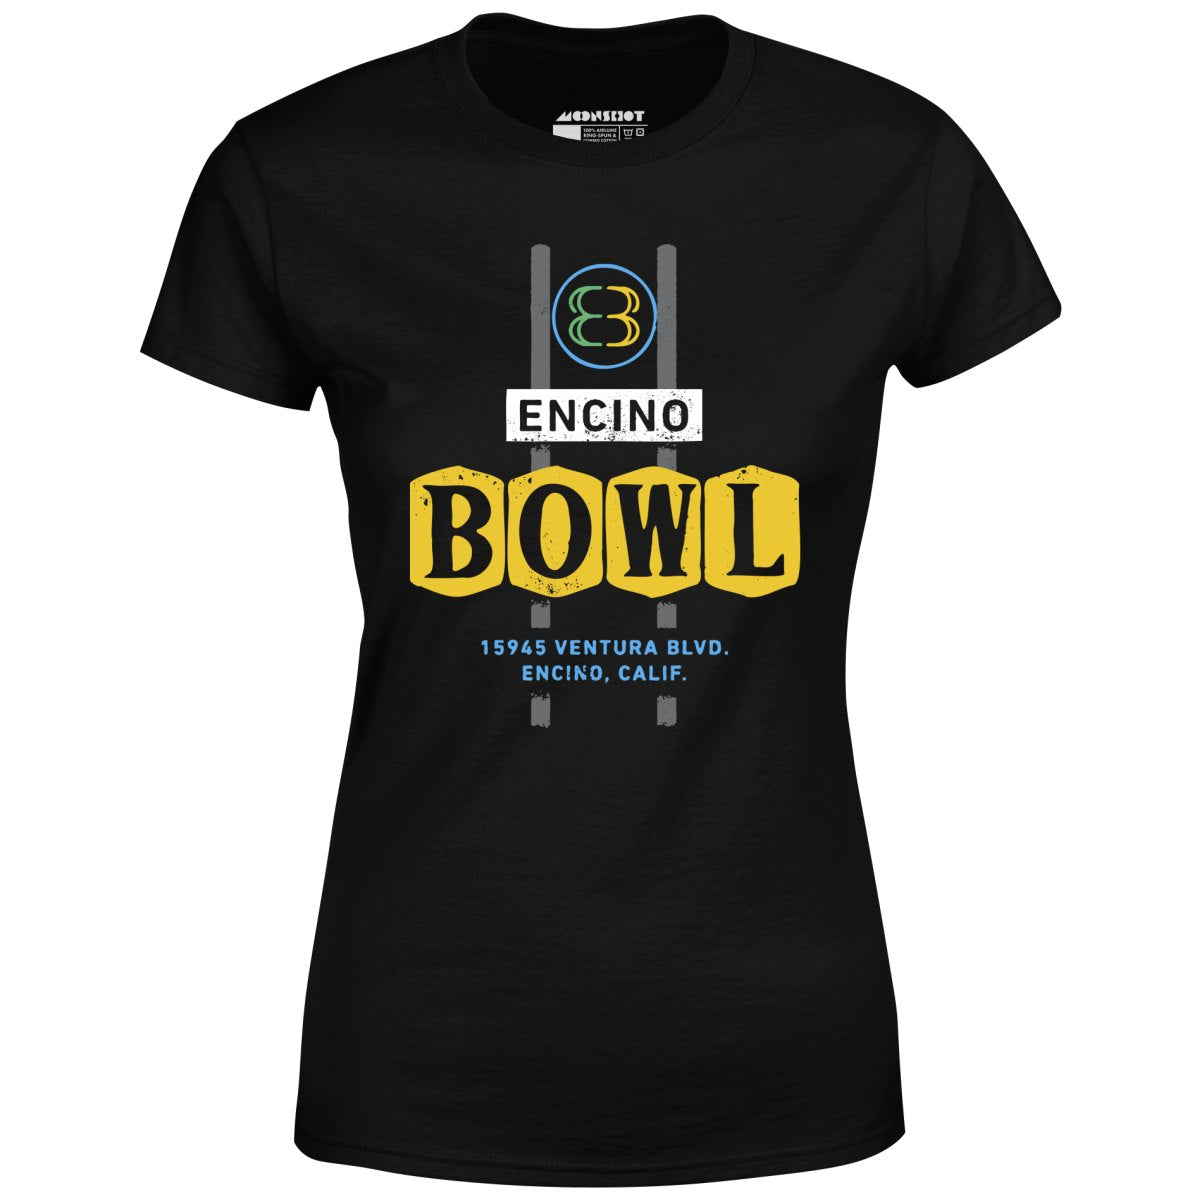 Encino Bowl - Encino, CA - Vintage Bowling Alley - Women's T-Shirt